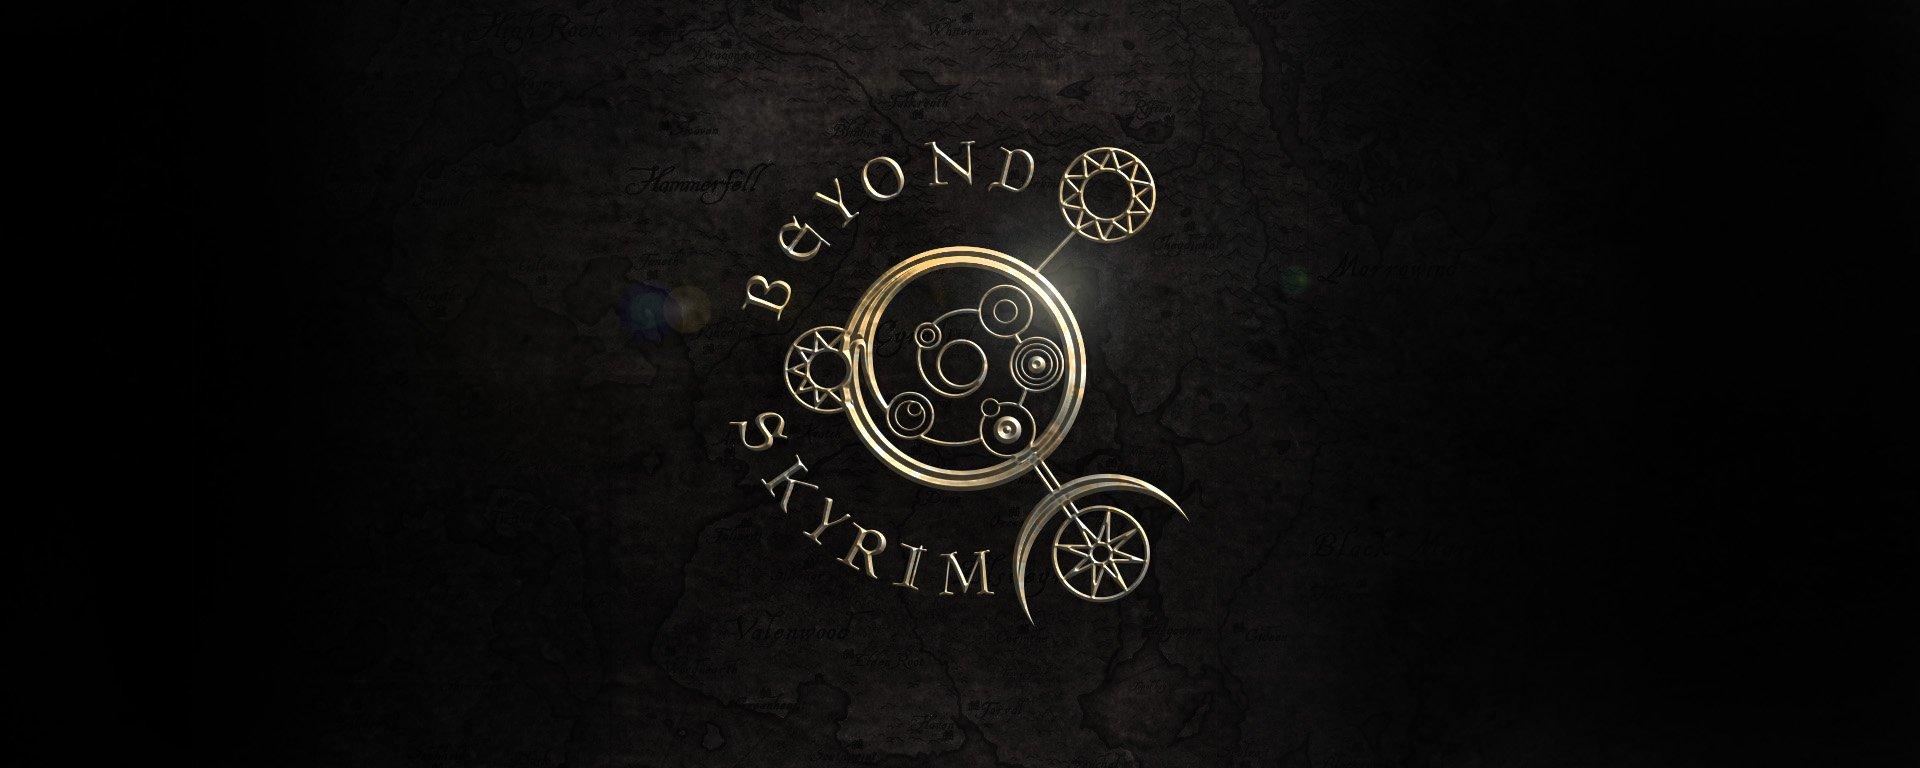 Beyond Skyrim:Cyrodiil/Gryfard Peton - The Unofficial Elder